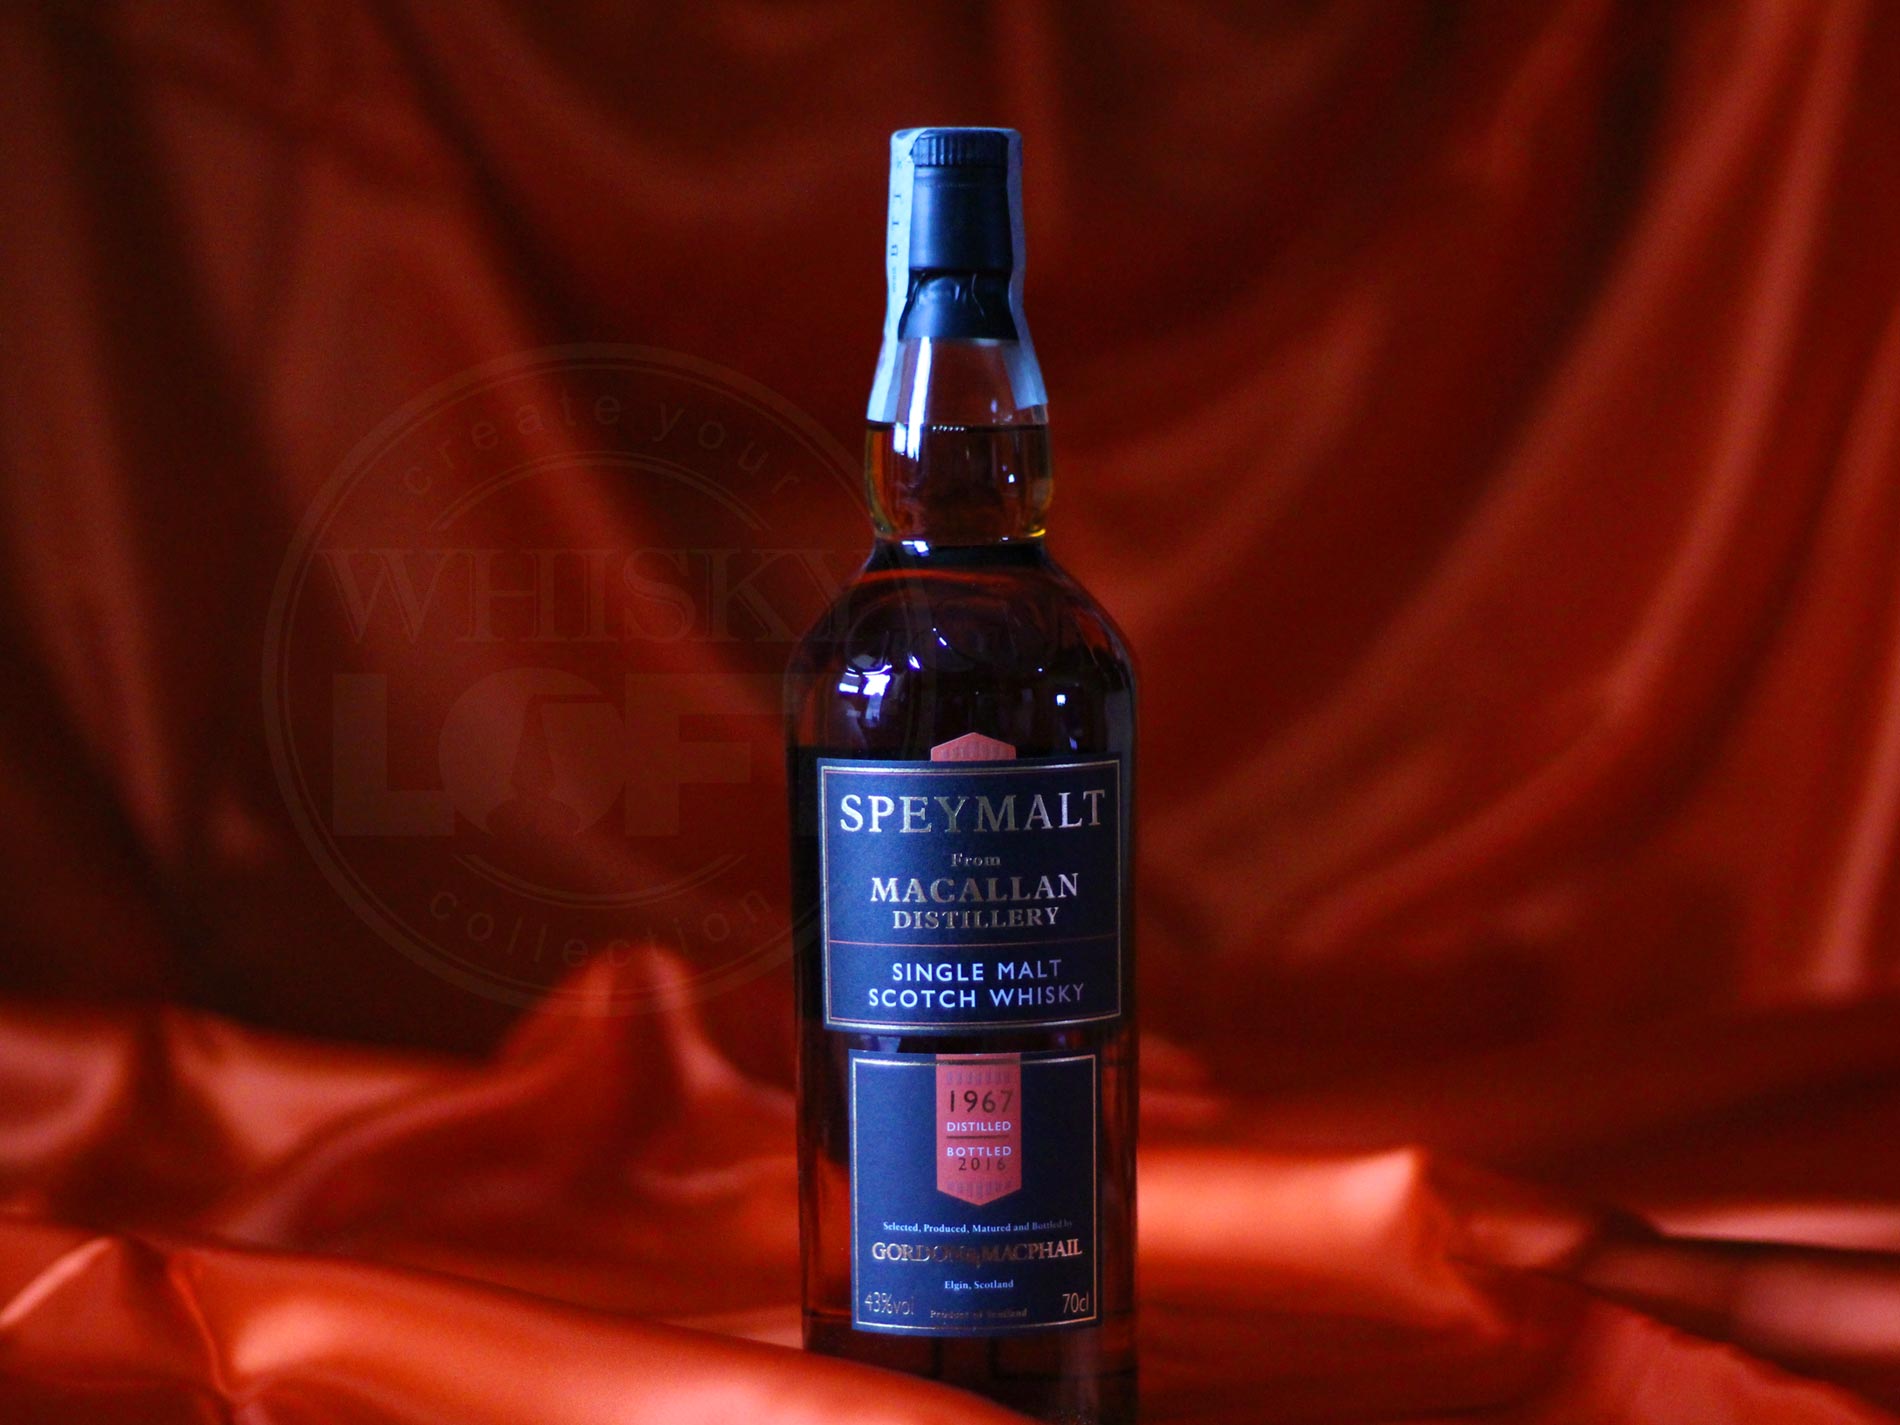 The Macallan, Gordon & MacPhail (GM), Single Malt Scotch Whisky, 1967 distilled.